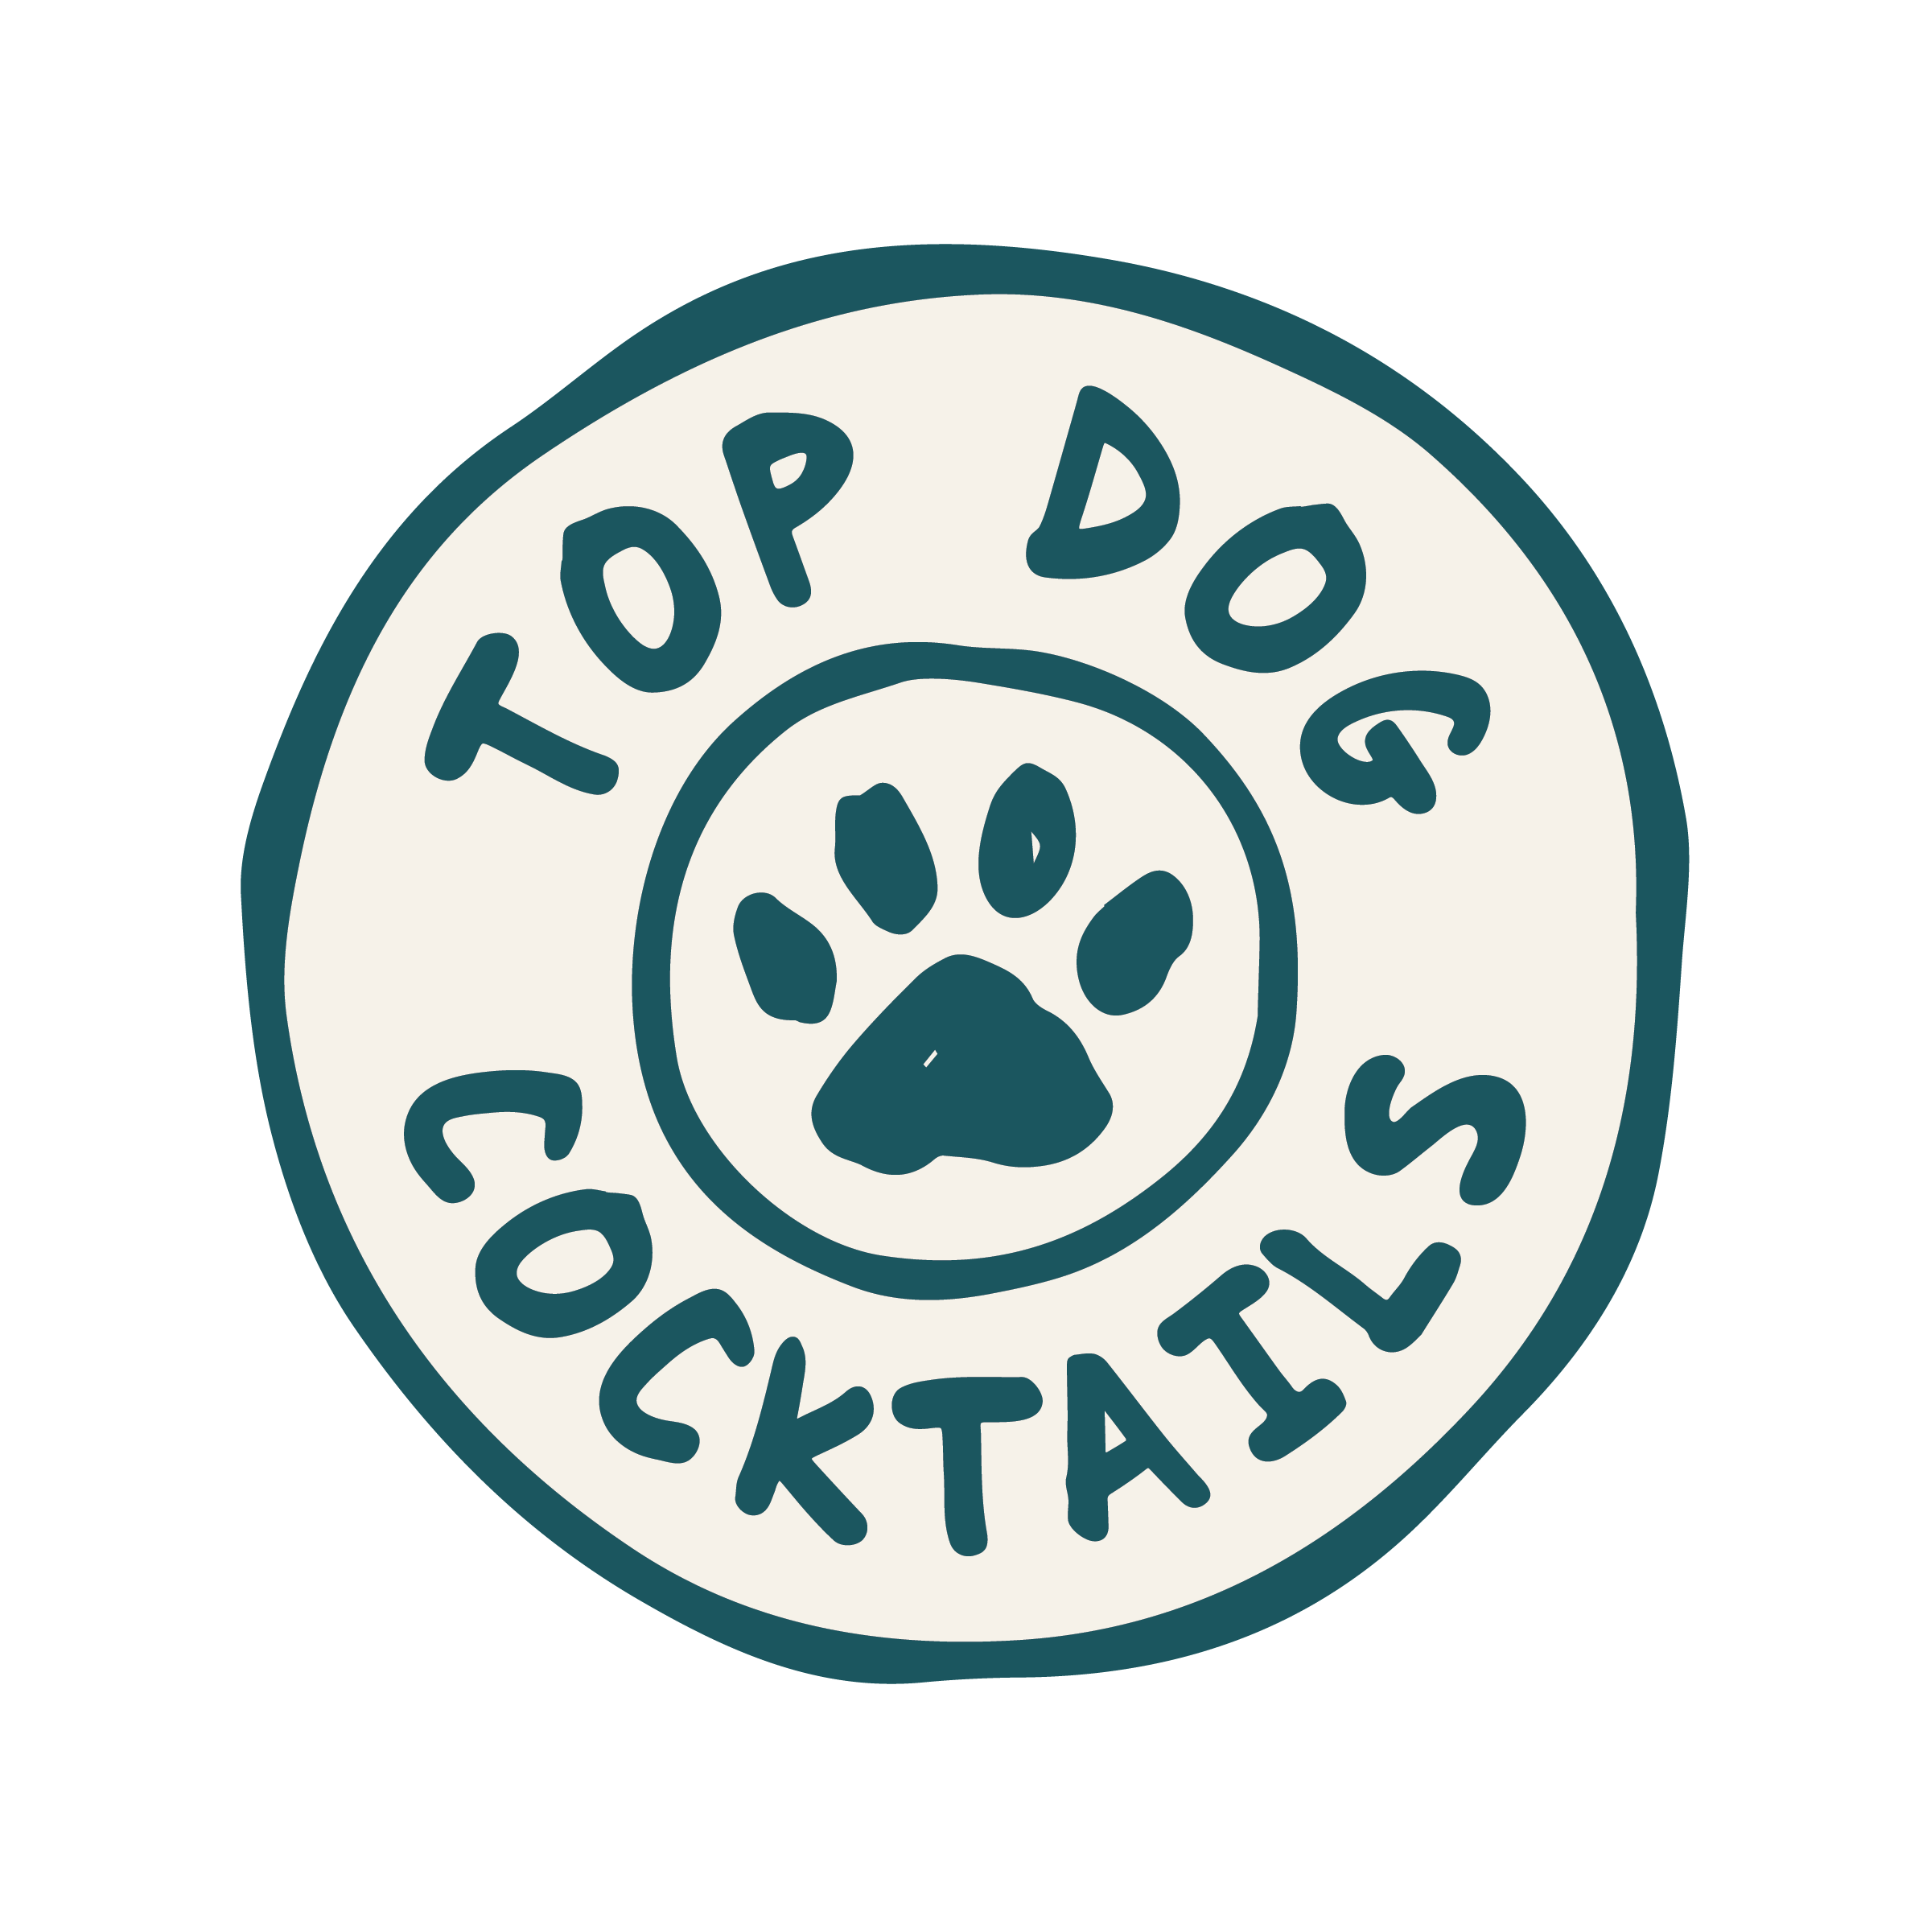 Top Dog Cocktails Merch